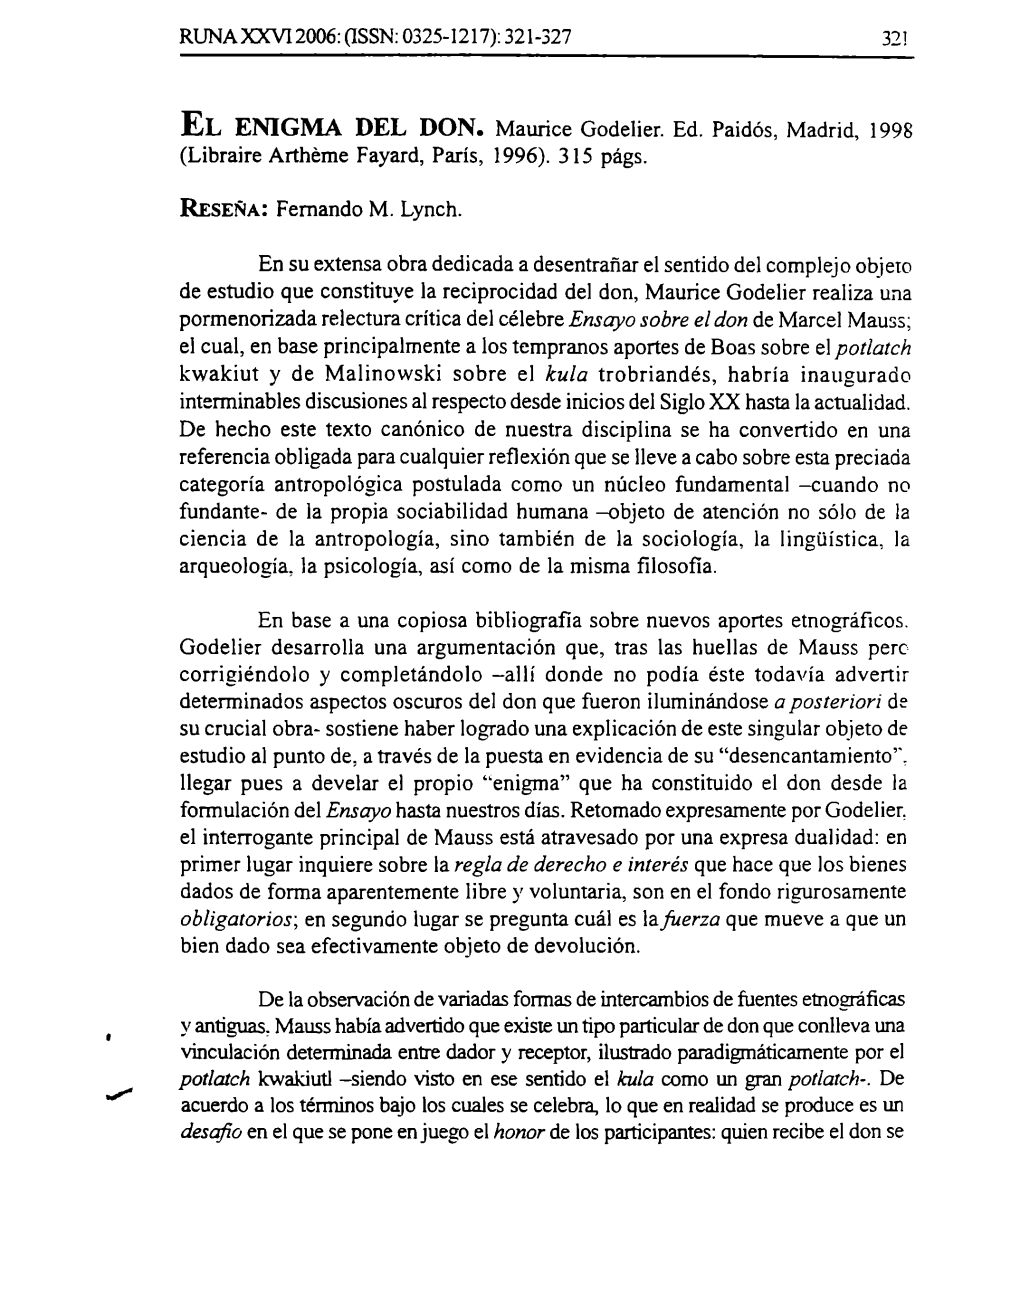 EL ENIGMA DEL DON. Maurice Godelier. Ed. Paidos, Madrid, 1998 (Libraire Arthéme Fayard, Paris, 1996)